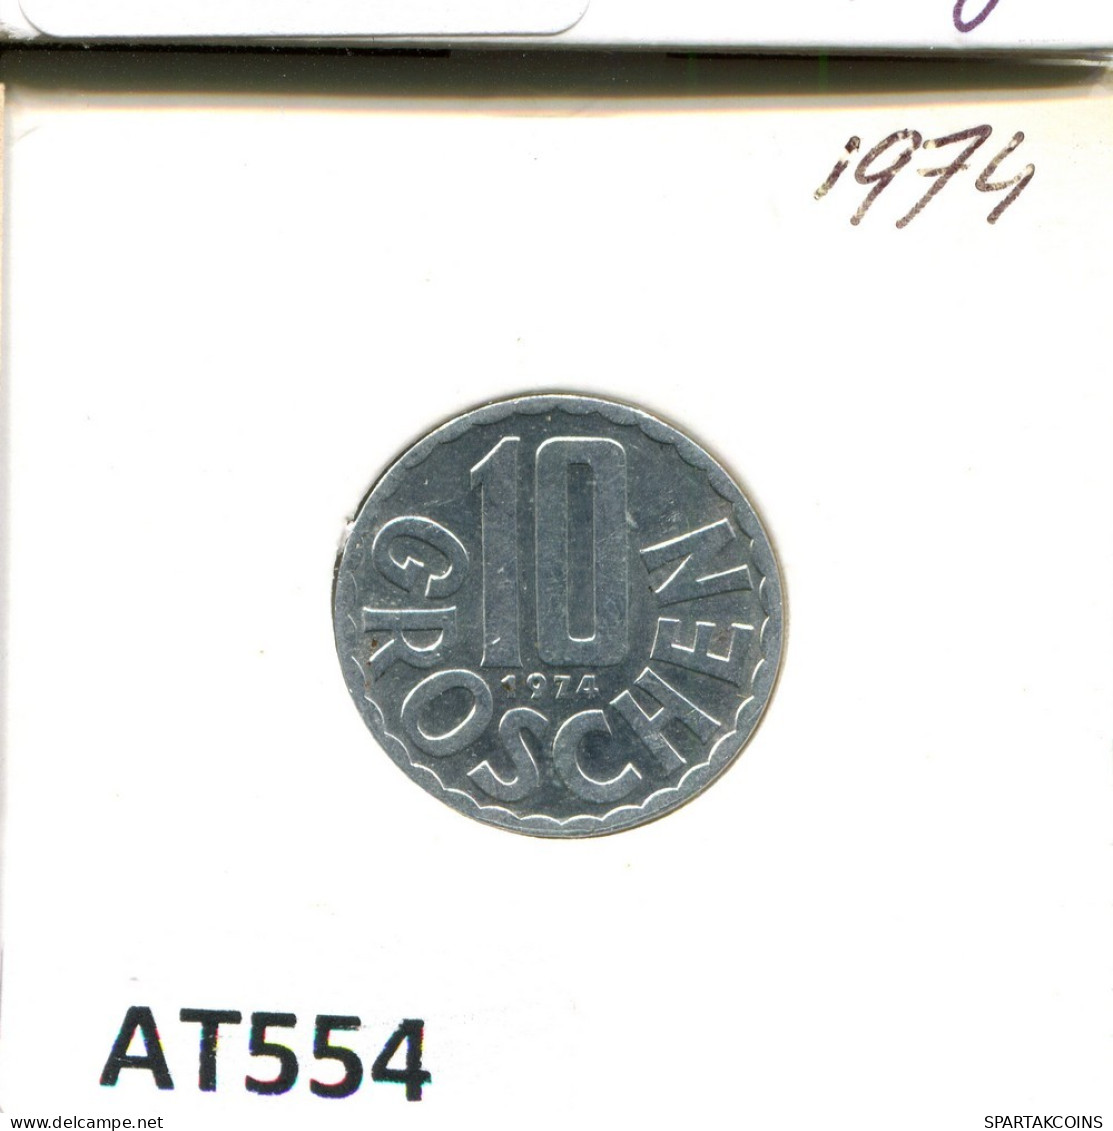 10 GROSCHEN 1974 AUSTRIA Coin #AT554.U.A - Austria